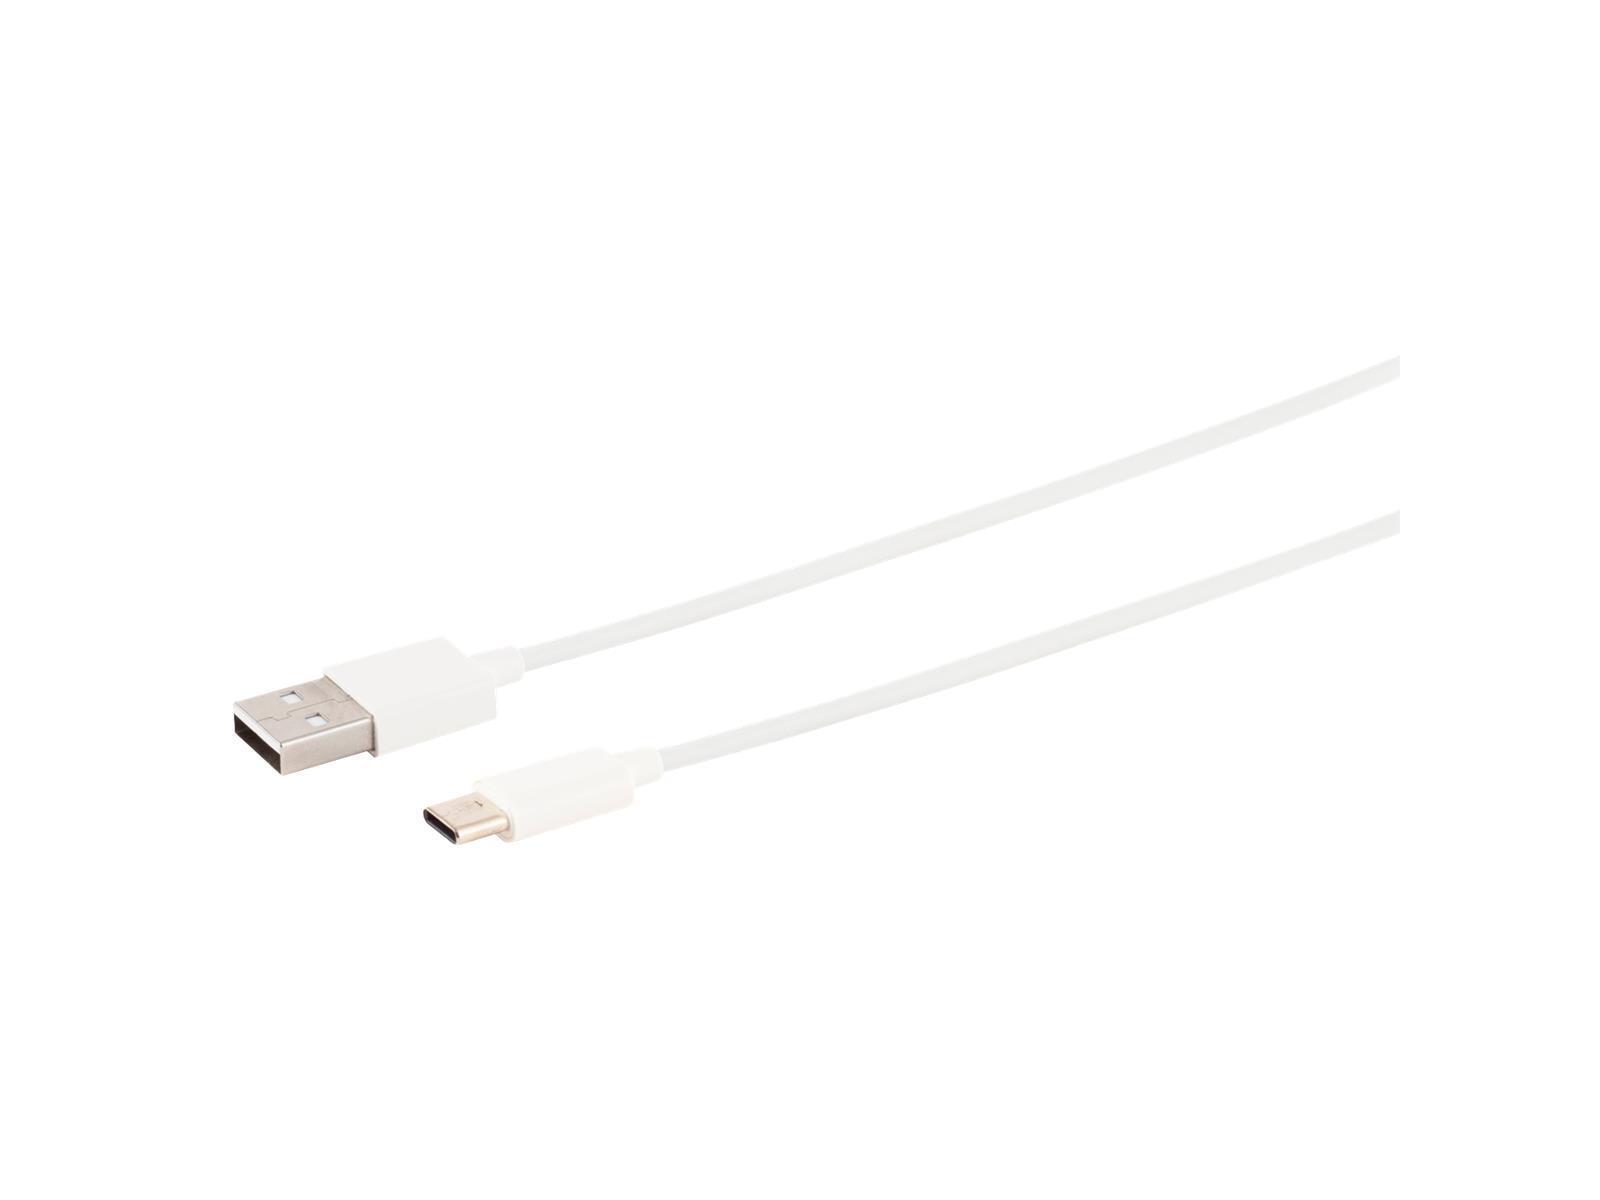 USB Lade-Sync Kabel, USB-A Stecker auf USB C-Stecker, 2.0, ABS, weiß, 1,5m